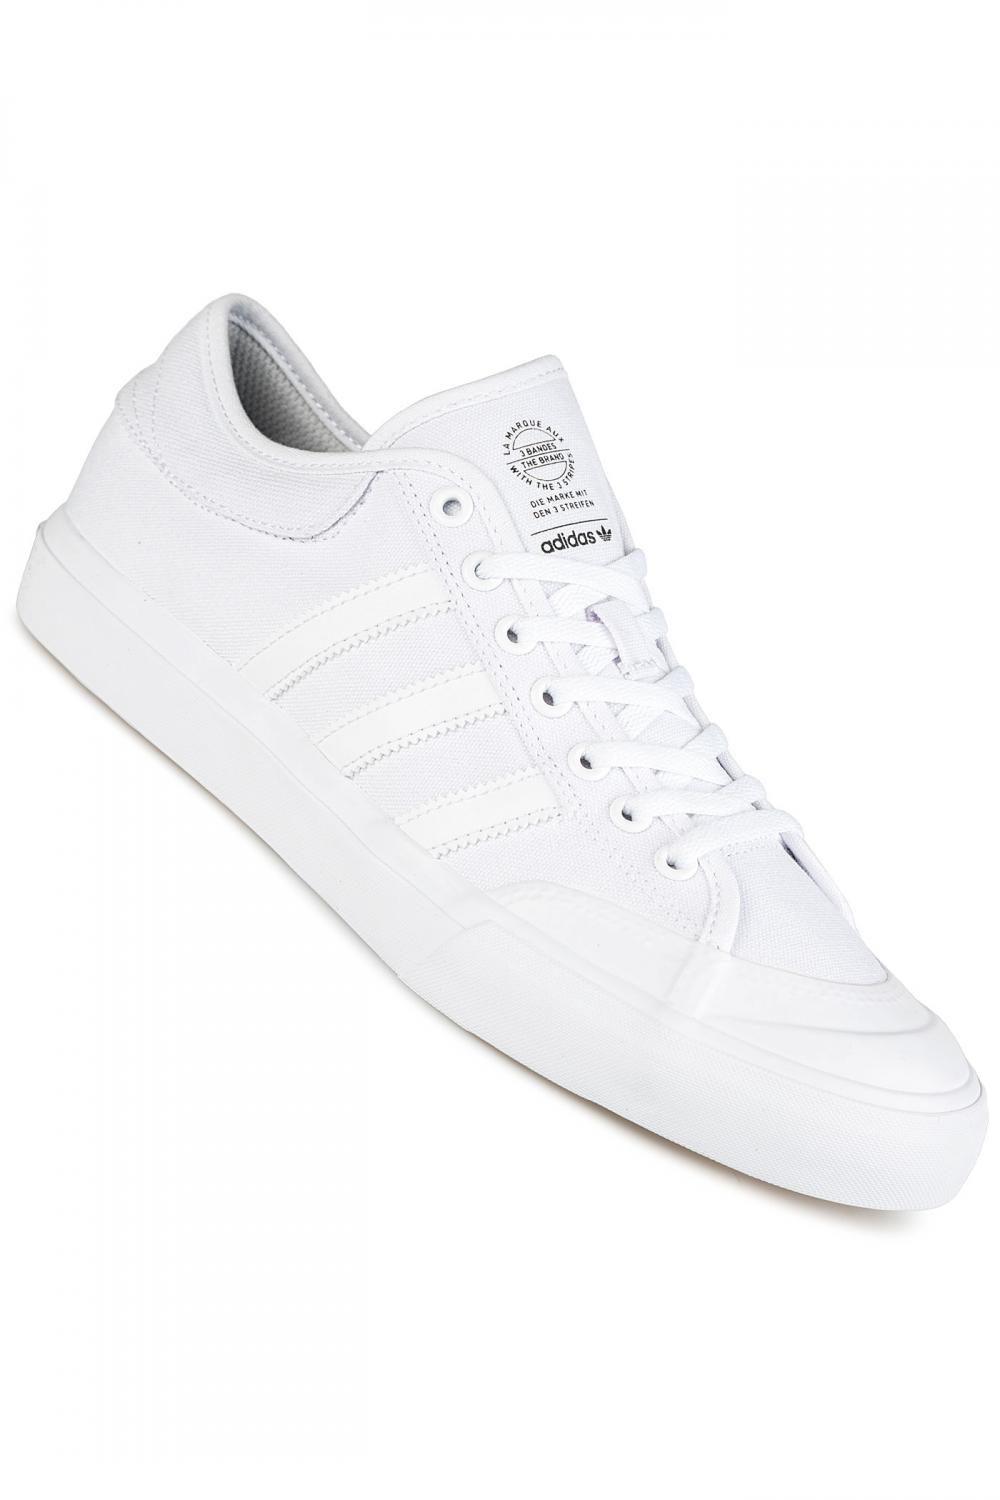 chaussure de skate adidas blanche